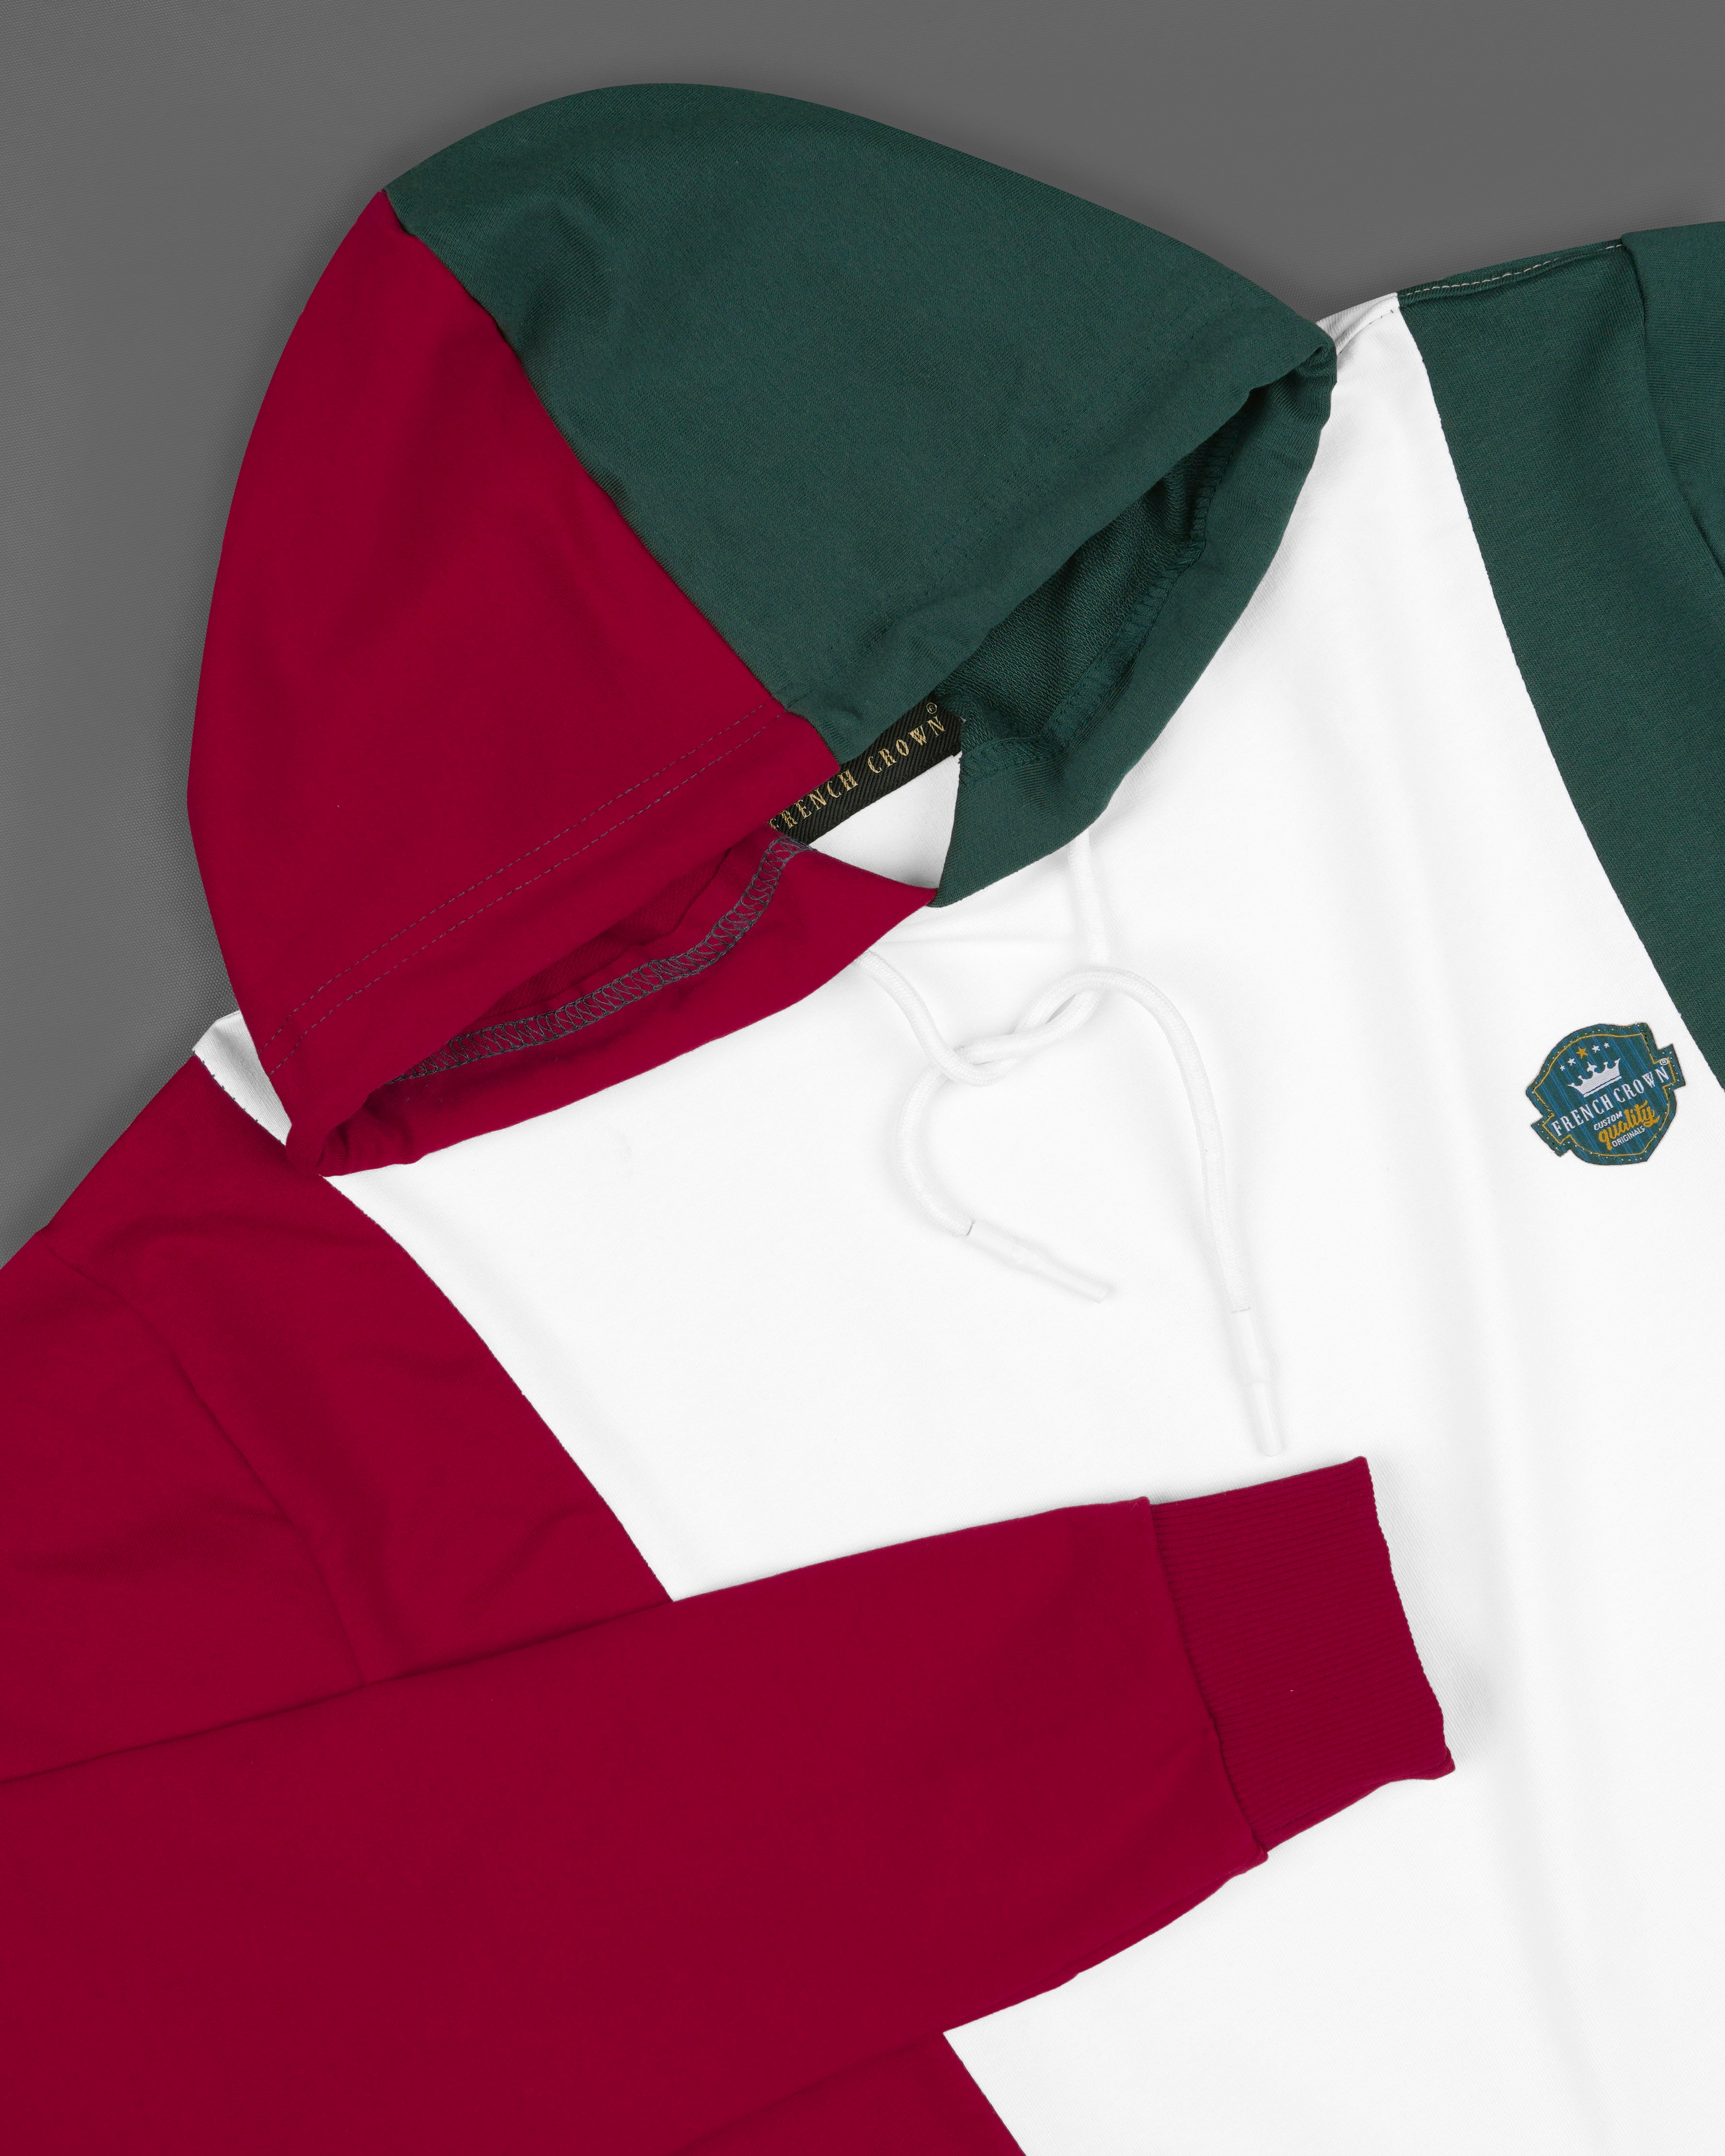 Bright White with Claret Red and Everglade Green Block Pattern Super Soft Premium Cotton Hoodie Sweatshirt TS609-S, TS609-M, TS609-L, TS609-XL, TS609-XXL, TS609-3XL, TS609-4XL